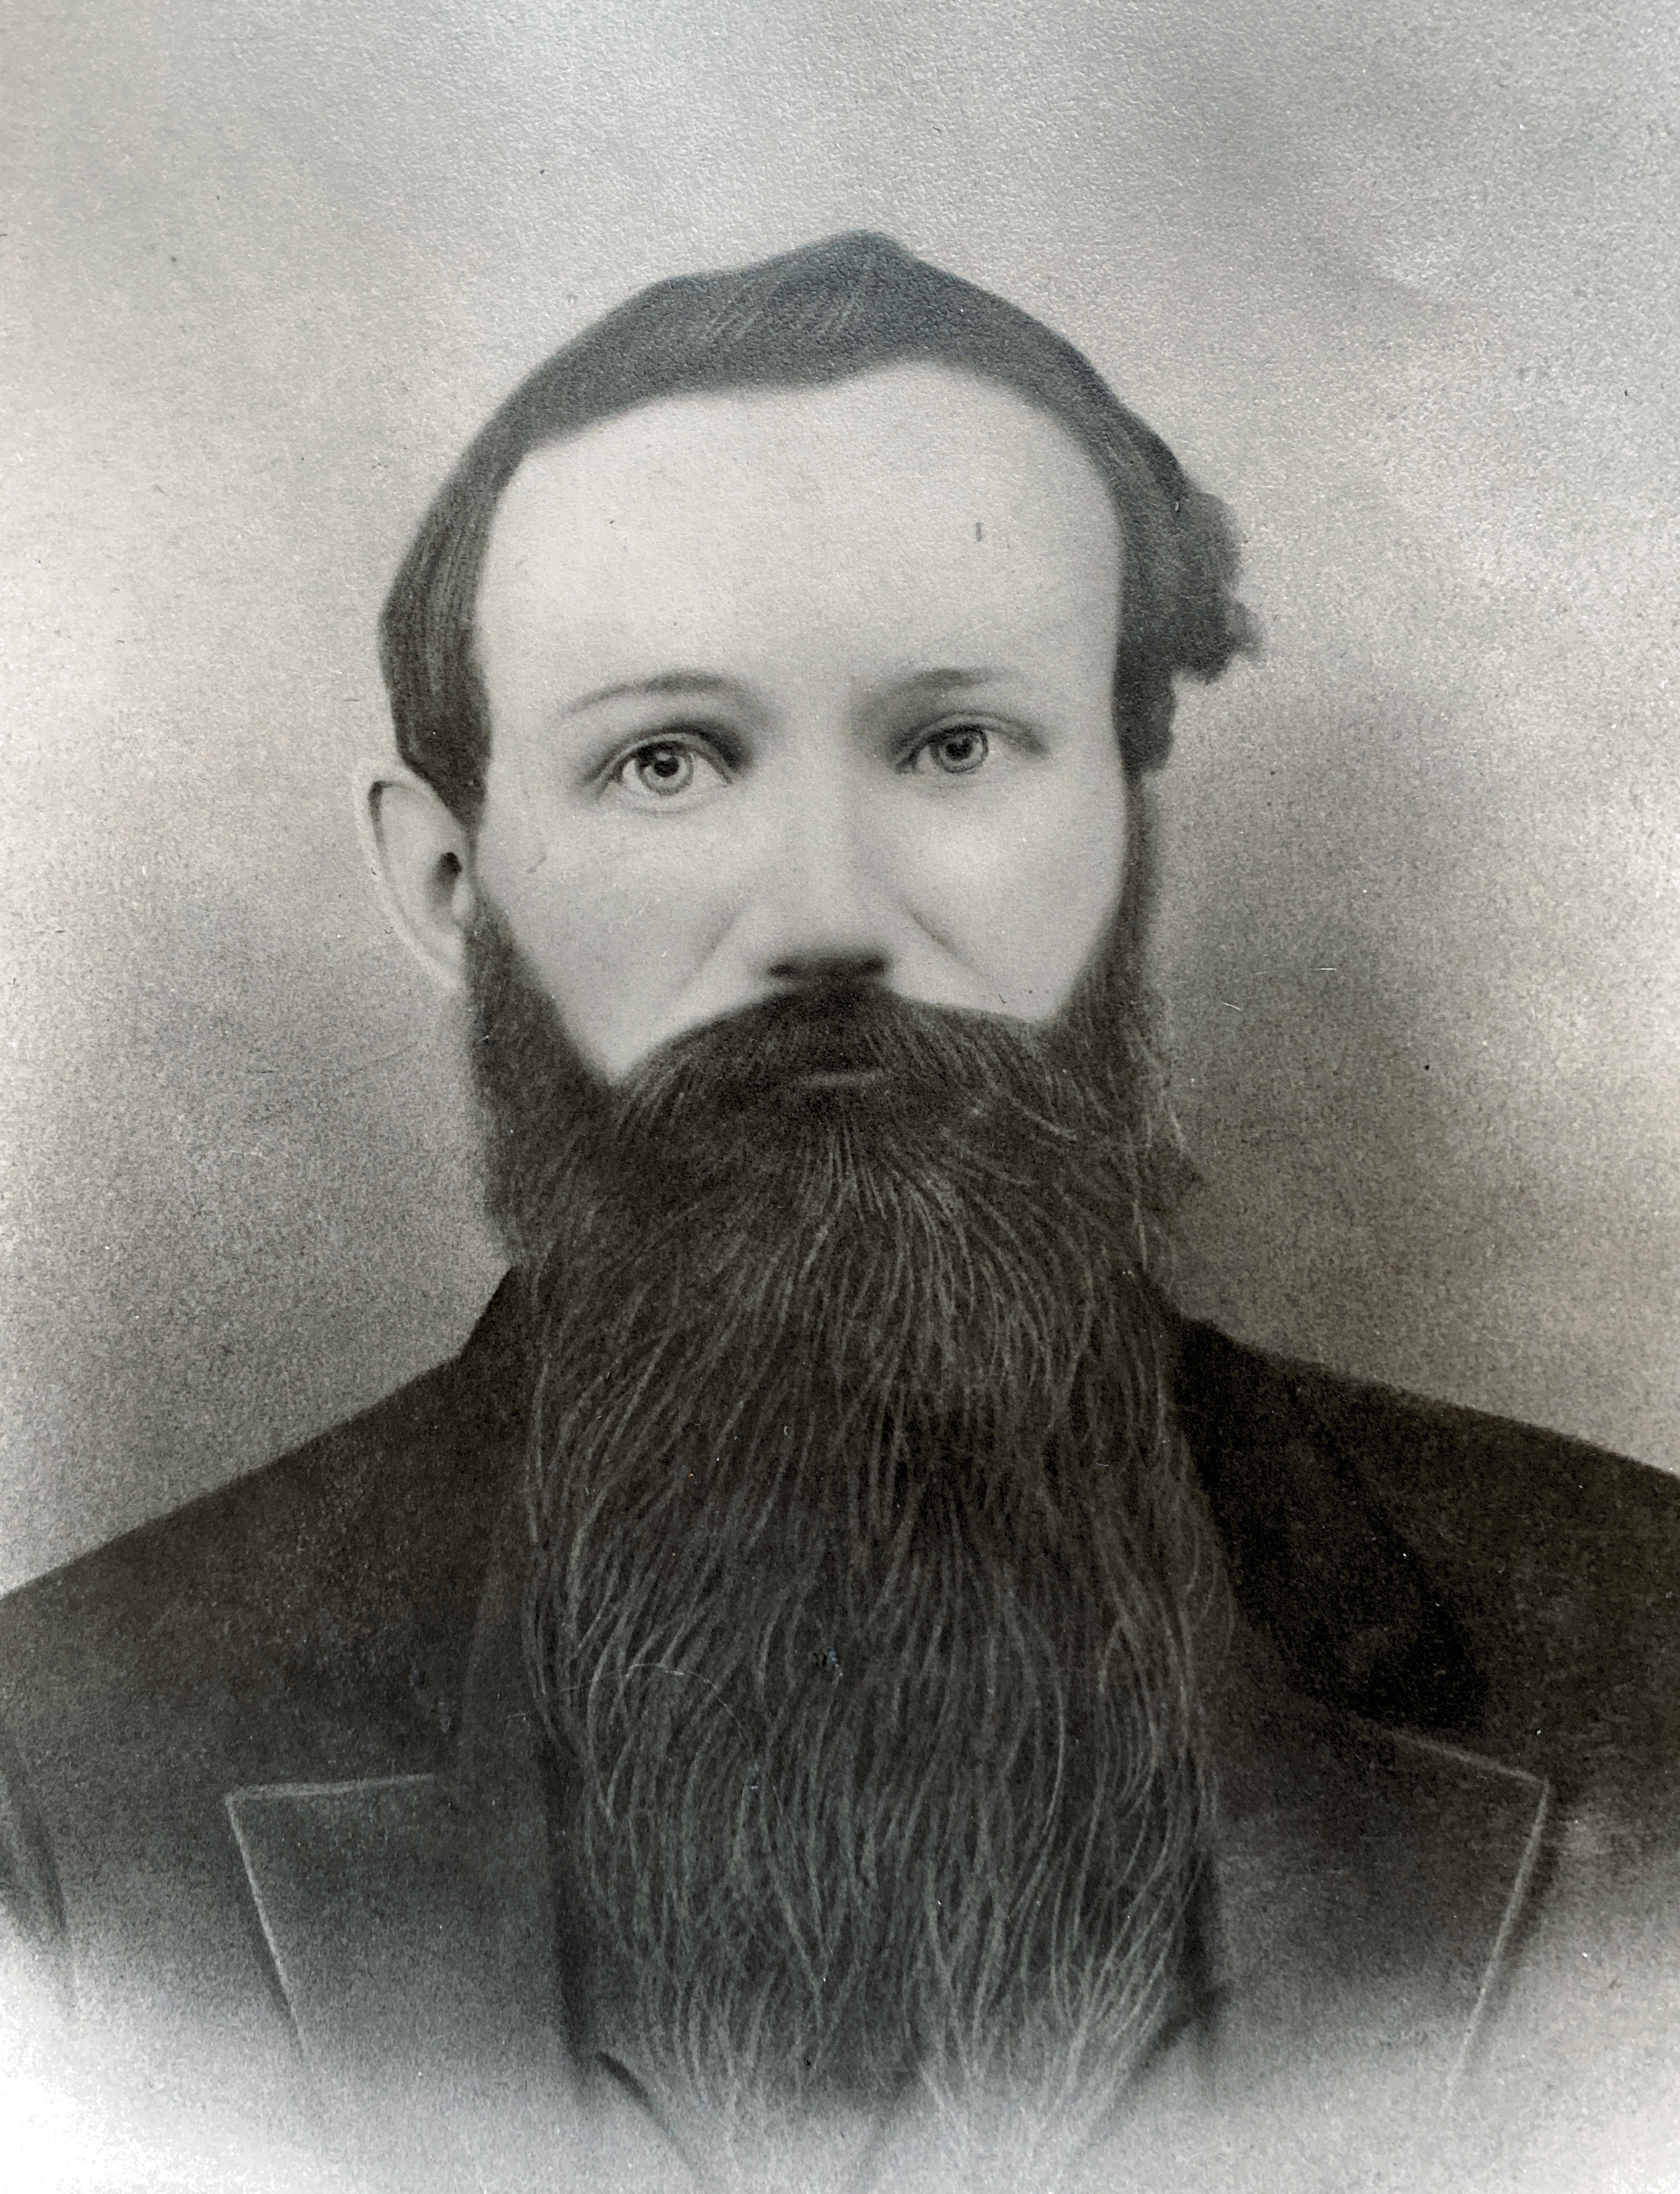 John James McCarley
Born 12/25/1829
Died 02/01/1901
Father of Harriet McCarley Trial